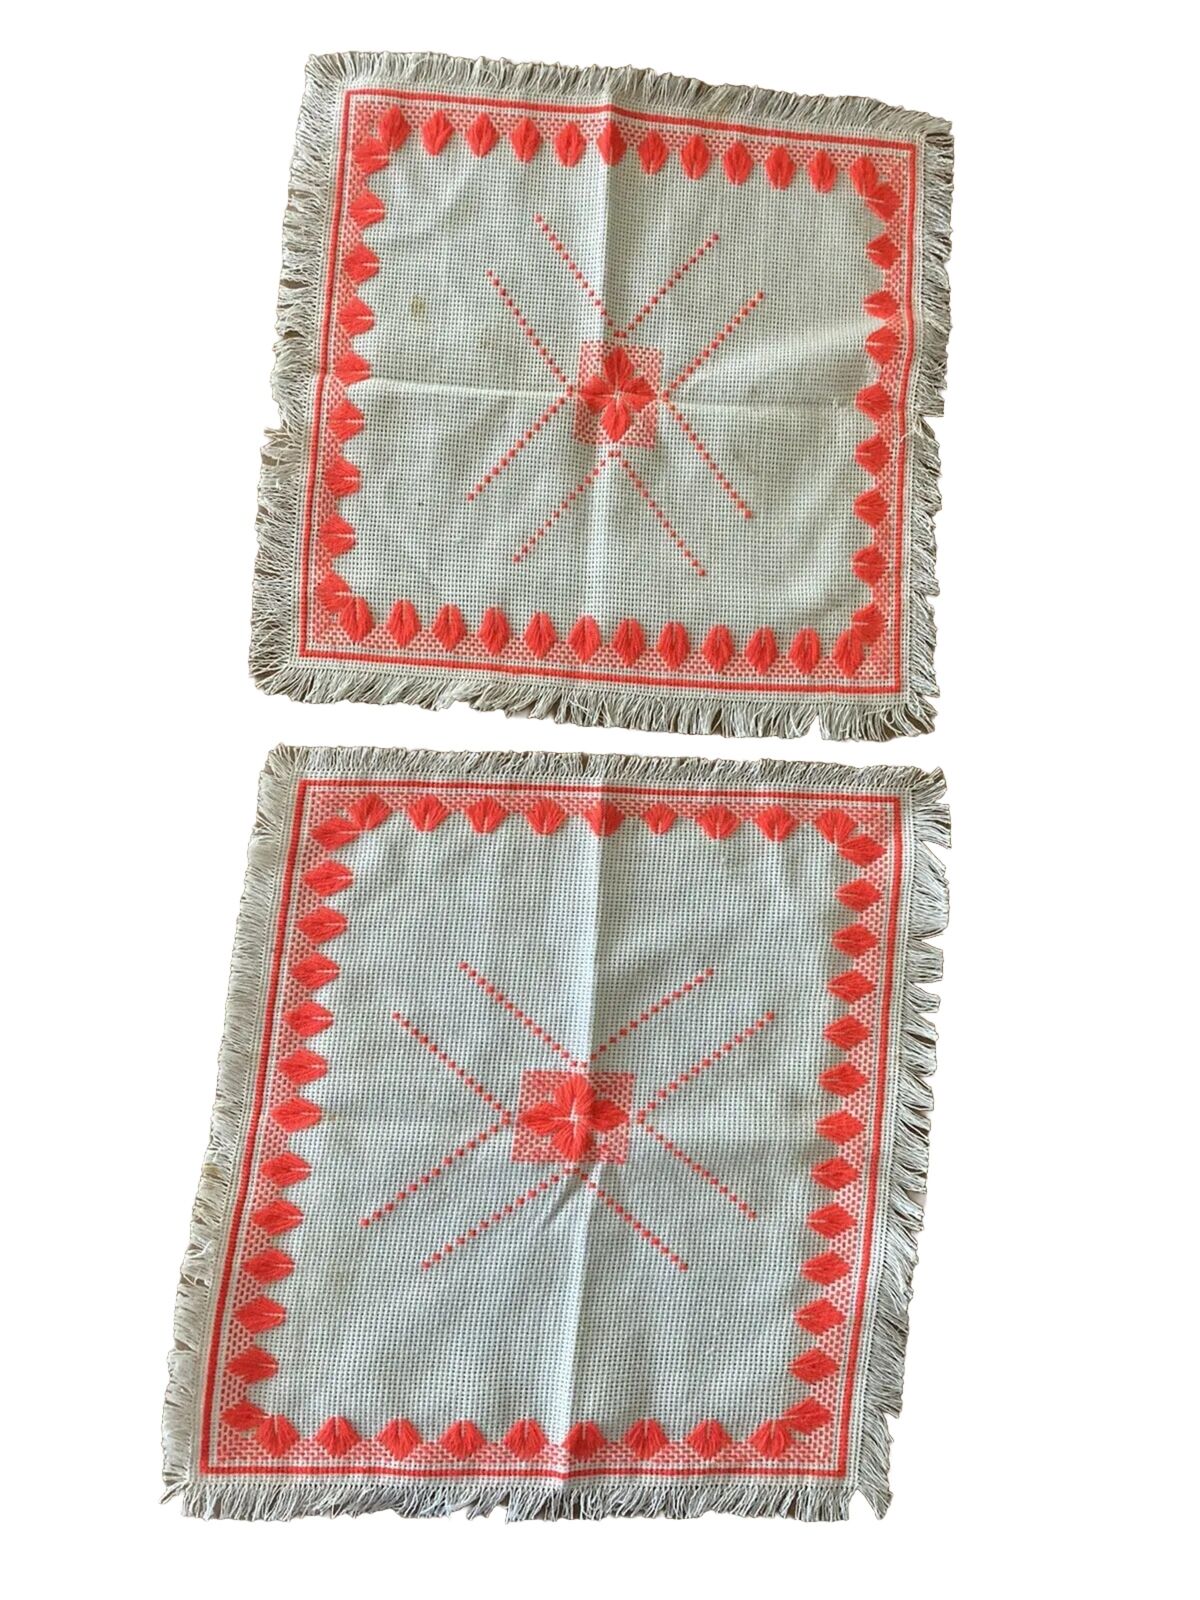 Two Vintage Table Linen Hand embroidery 13x13 Orange bundle